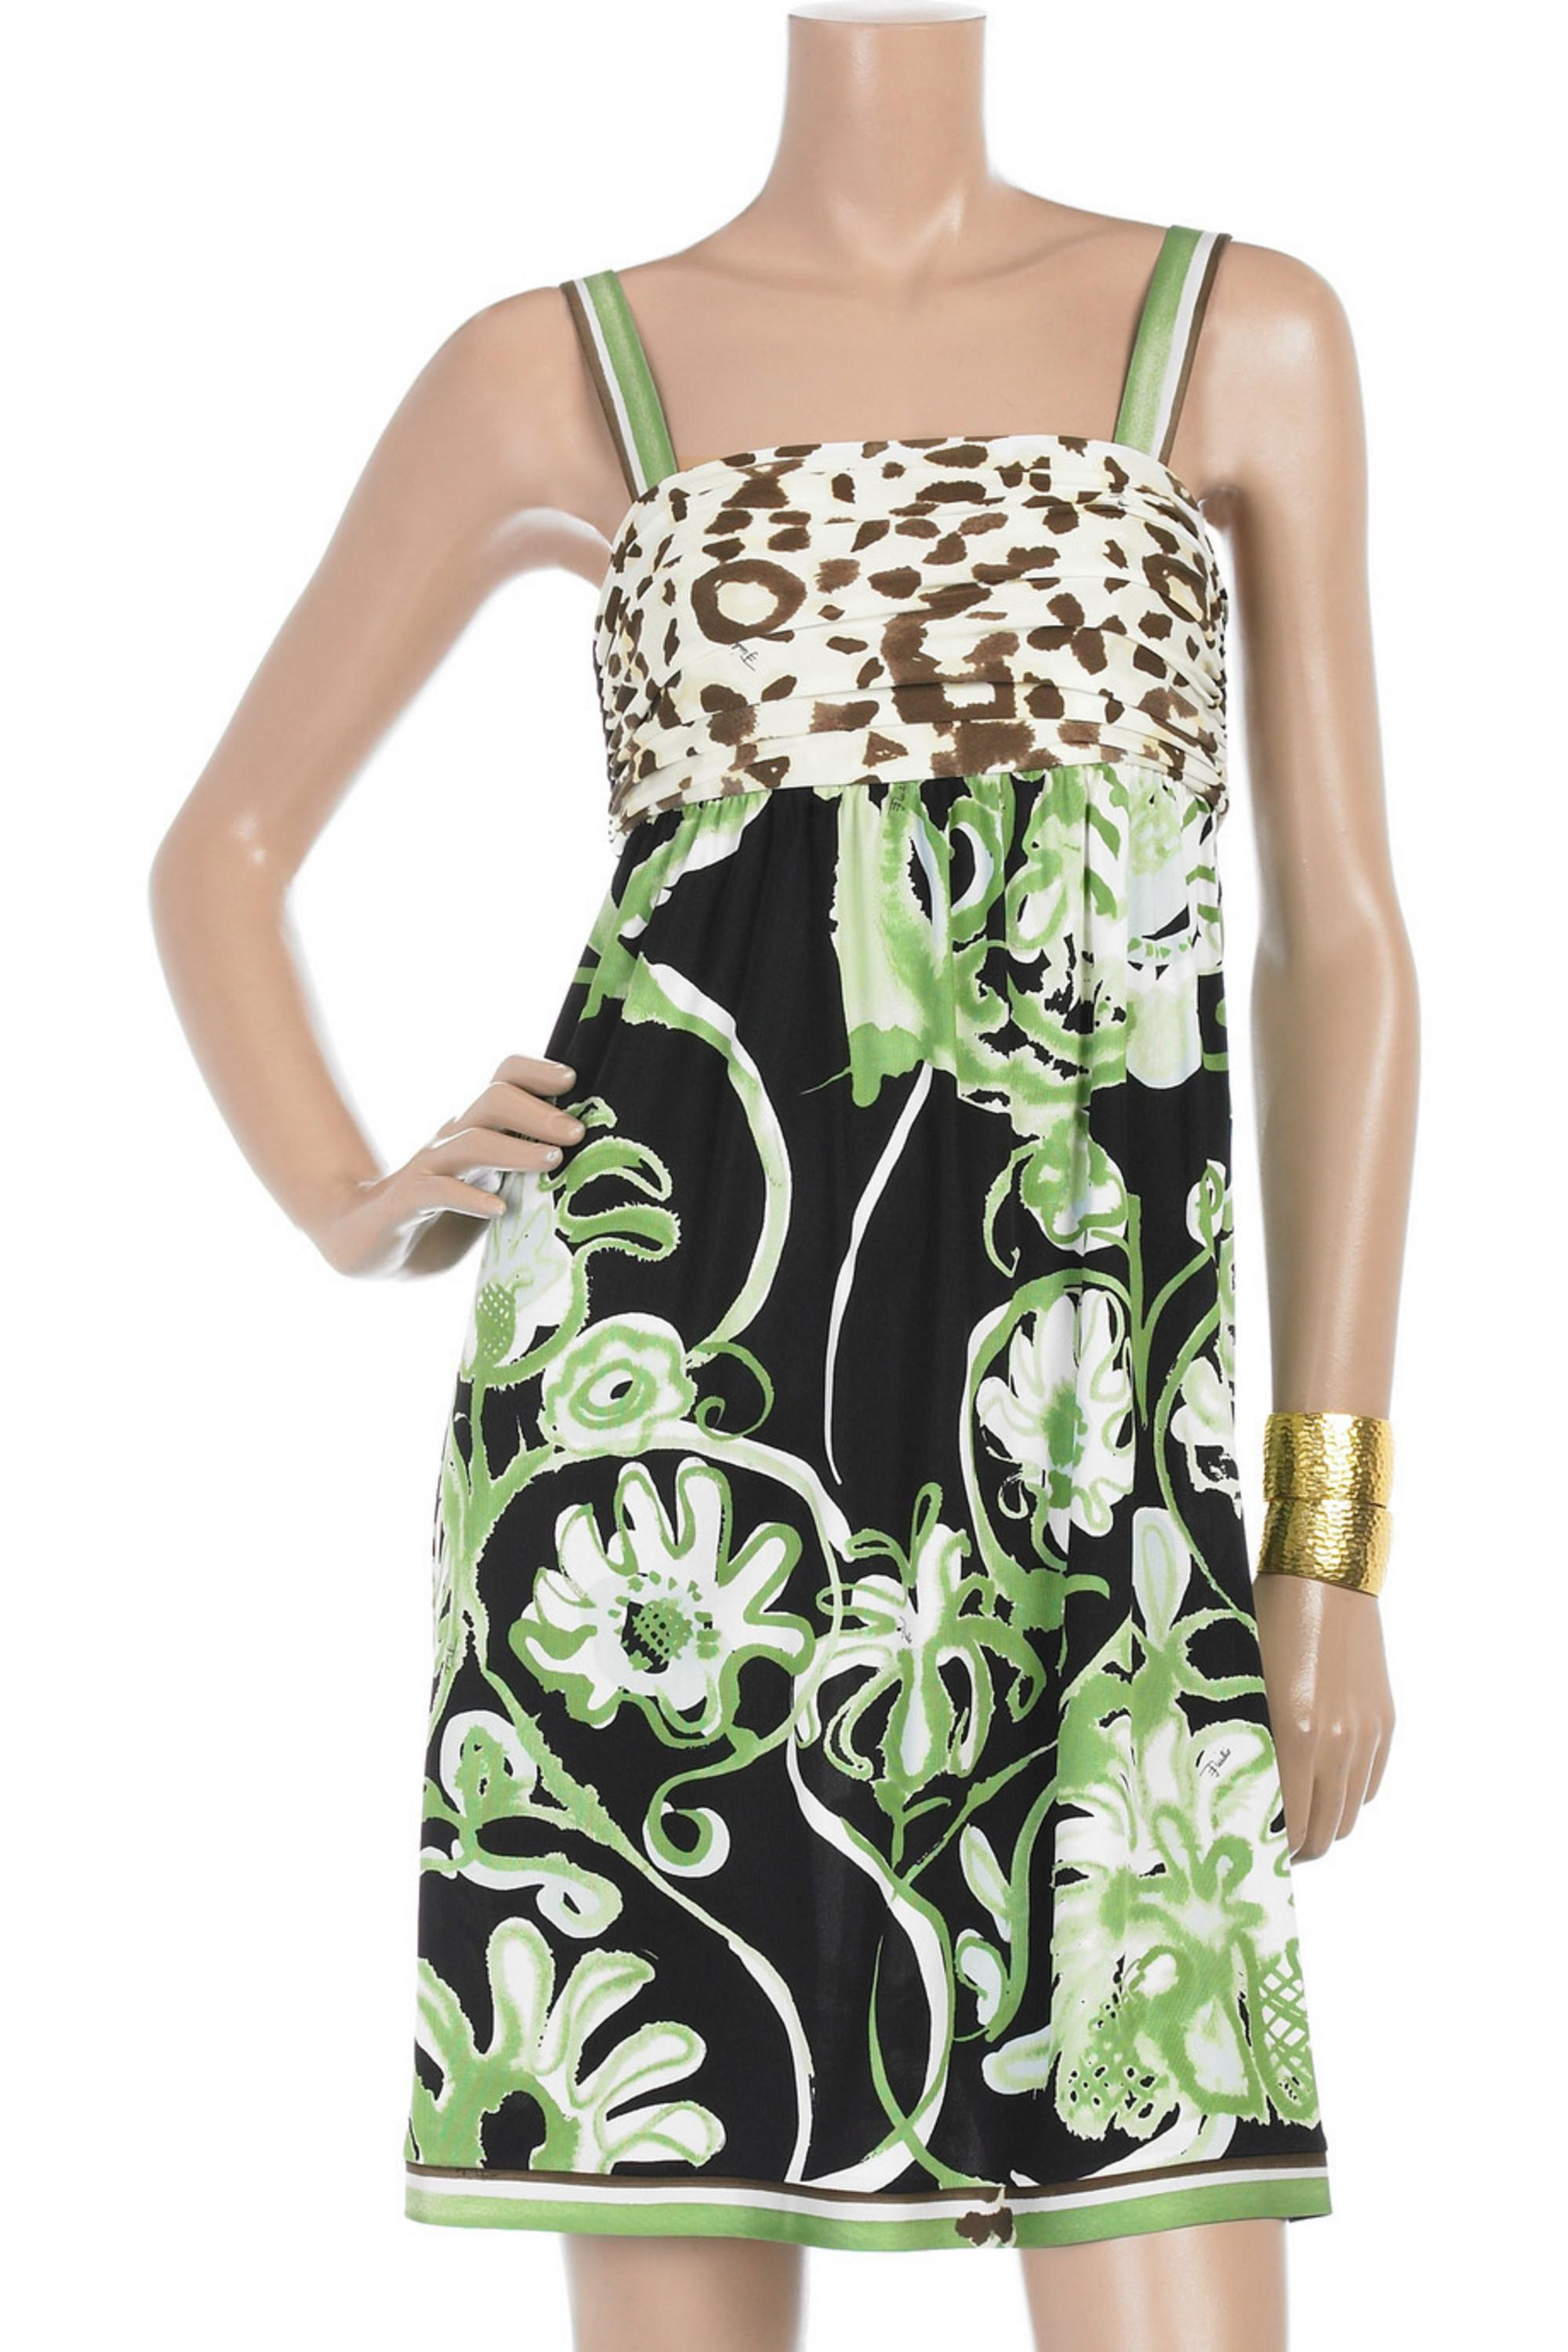 UNWORN Emilio Pucci Silk Jersey Jungle Cheetah Floral Botanical Print Dress 42 4